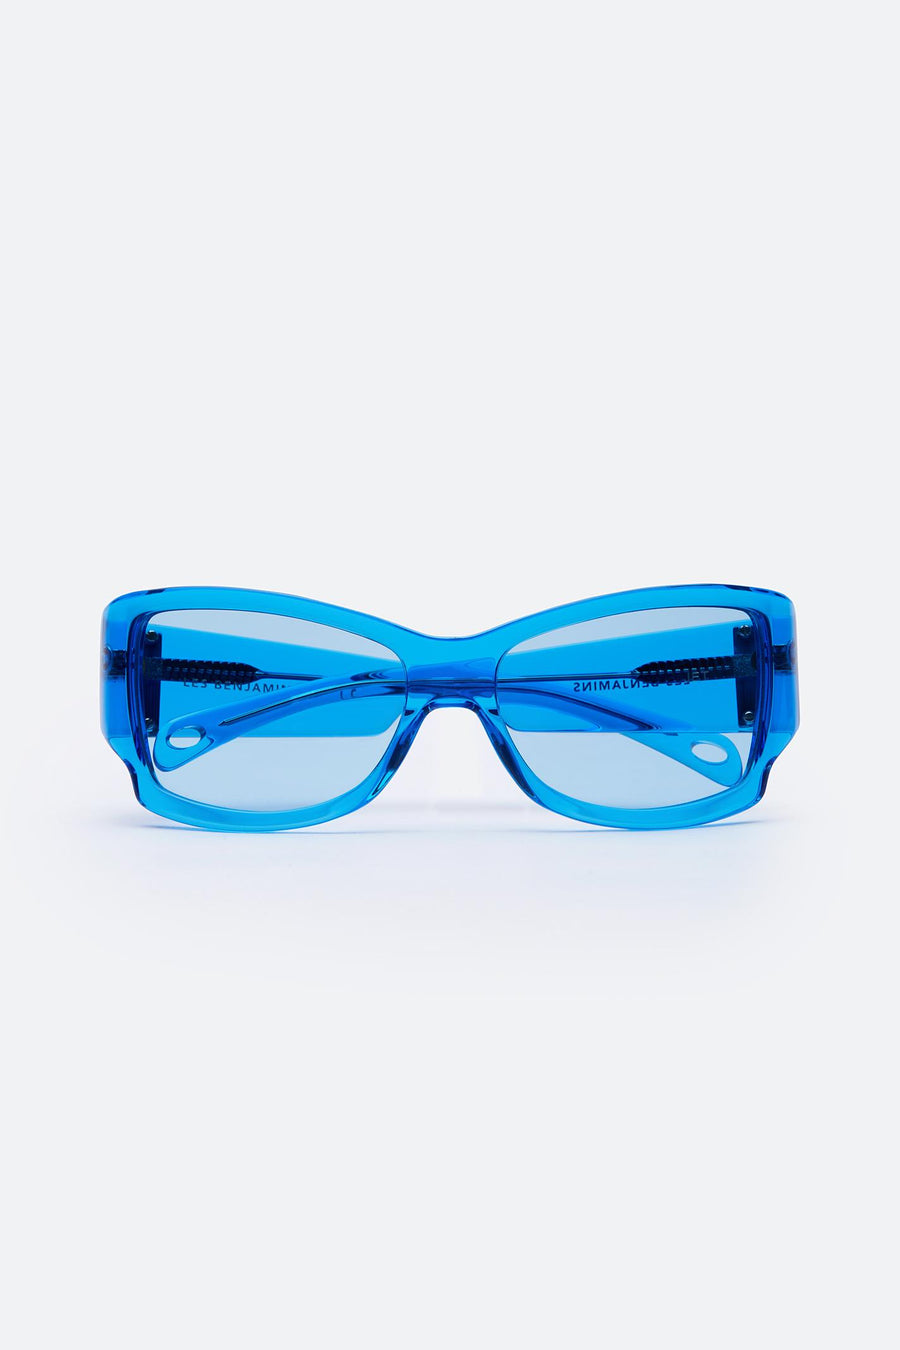 NINES® Polarized + NIRTECH® Sunglasses | SANTEE | Performance Fishing  Eyewear